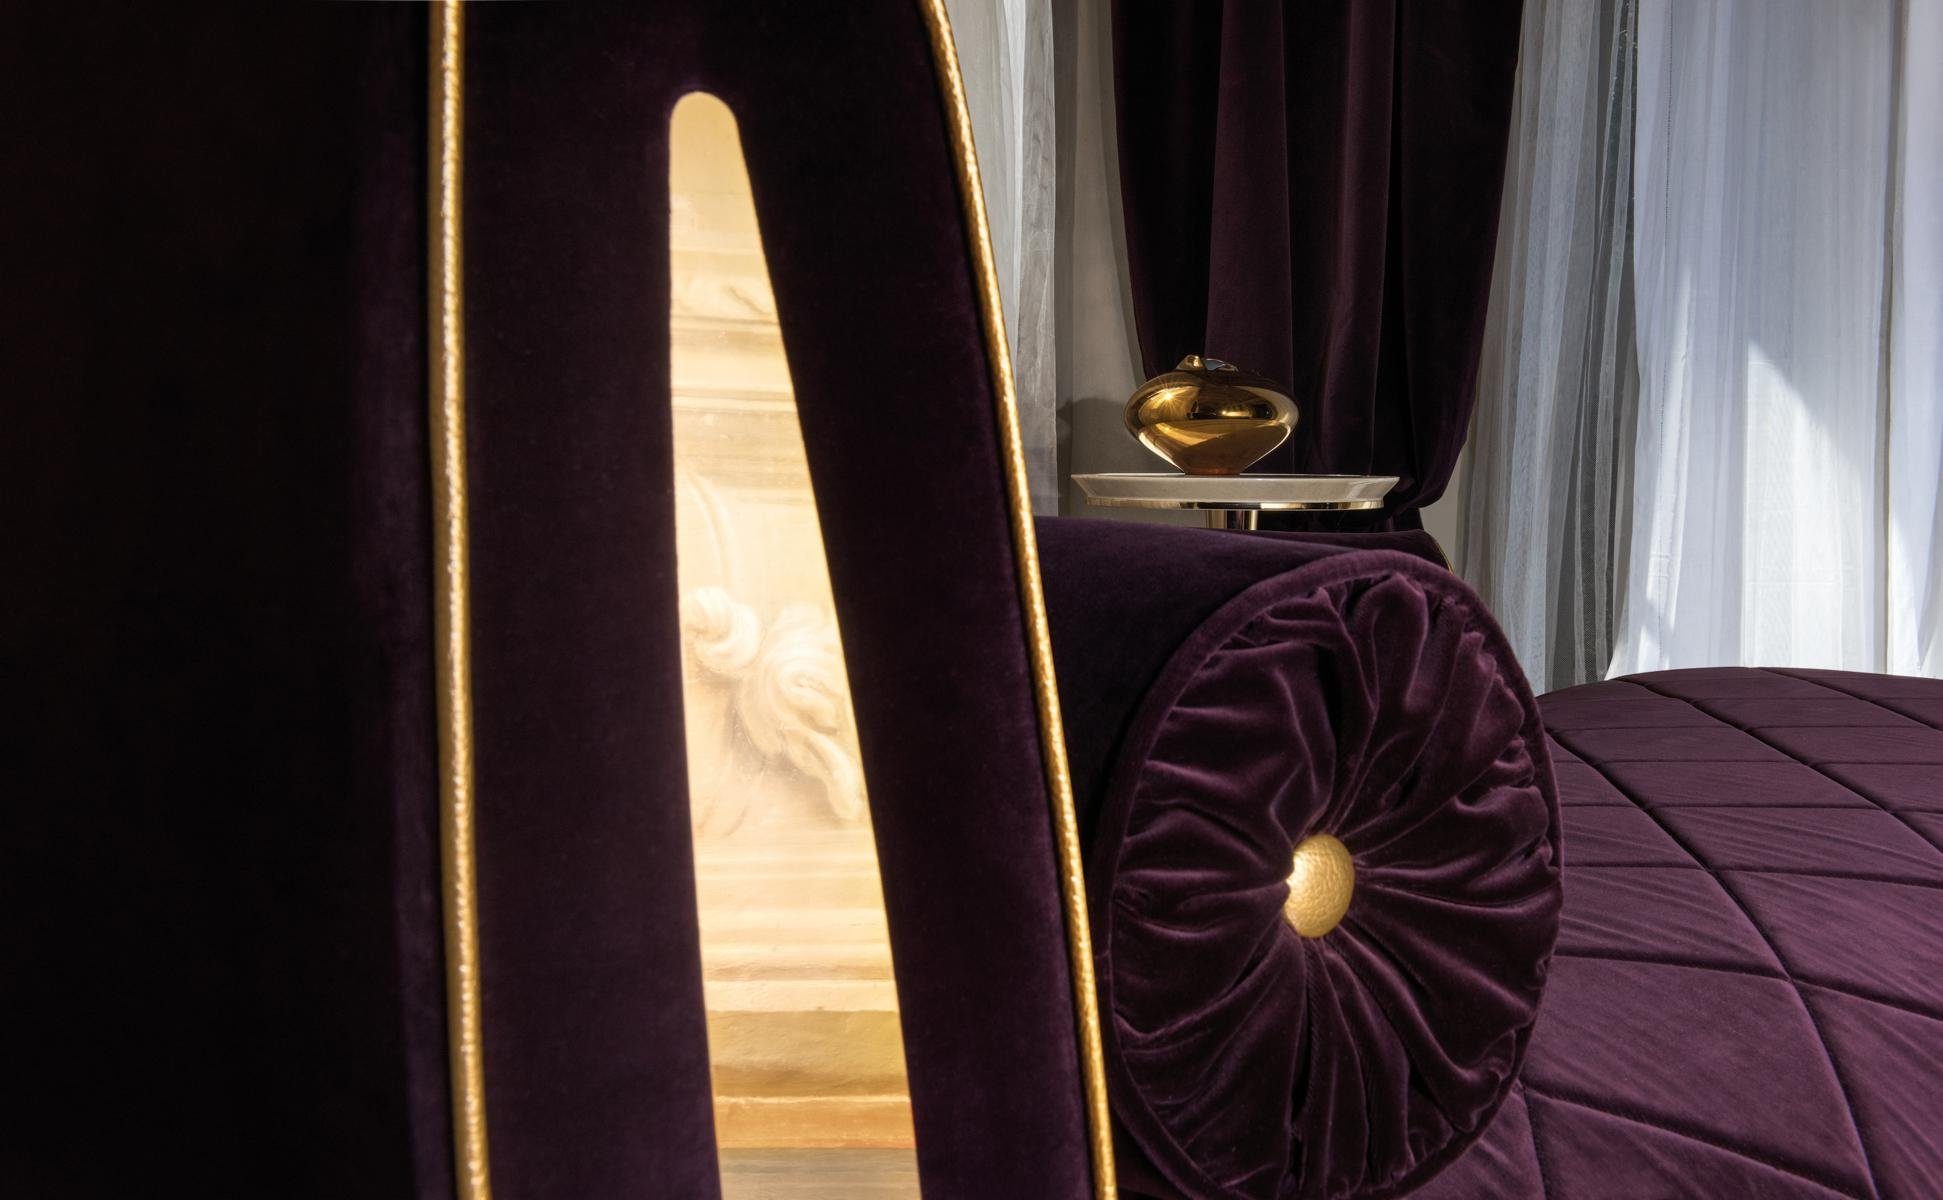 JVmoebel Essgruppe, Esszimmer Möbel royal Barock Esstisch Stühle arredoclassic™ Jugendstil Rokoko 6 luxus Neu Tisch